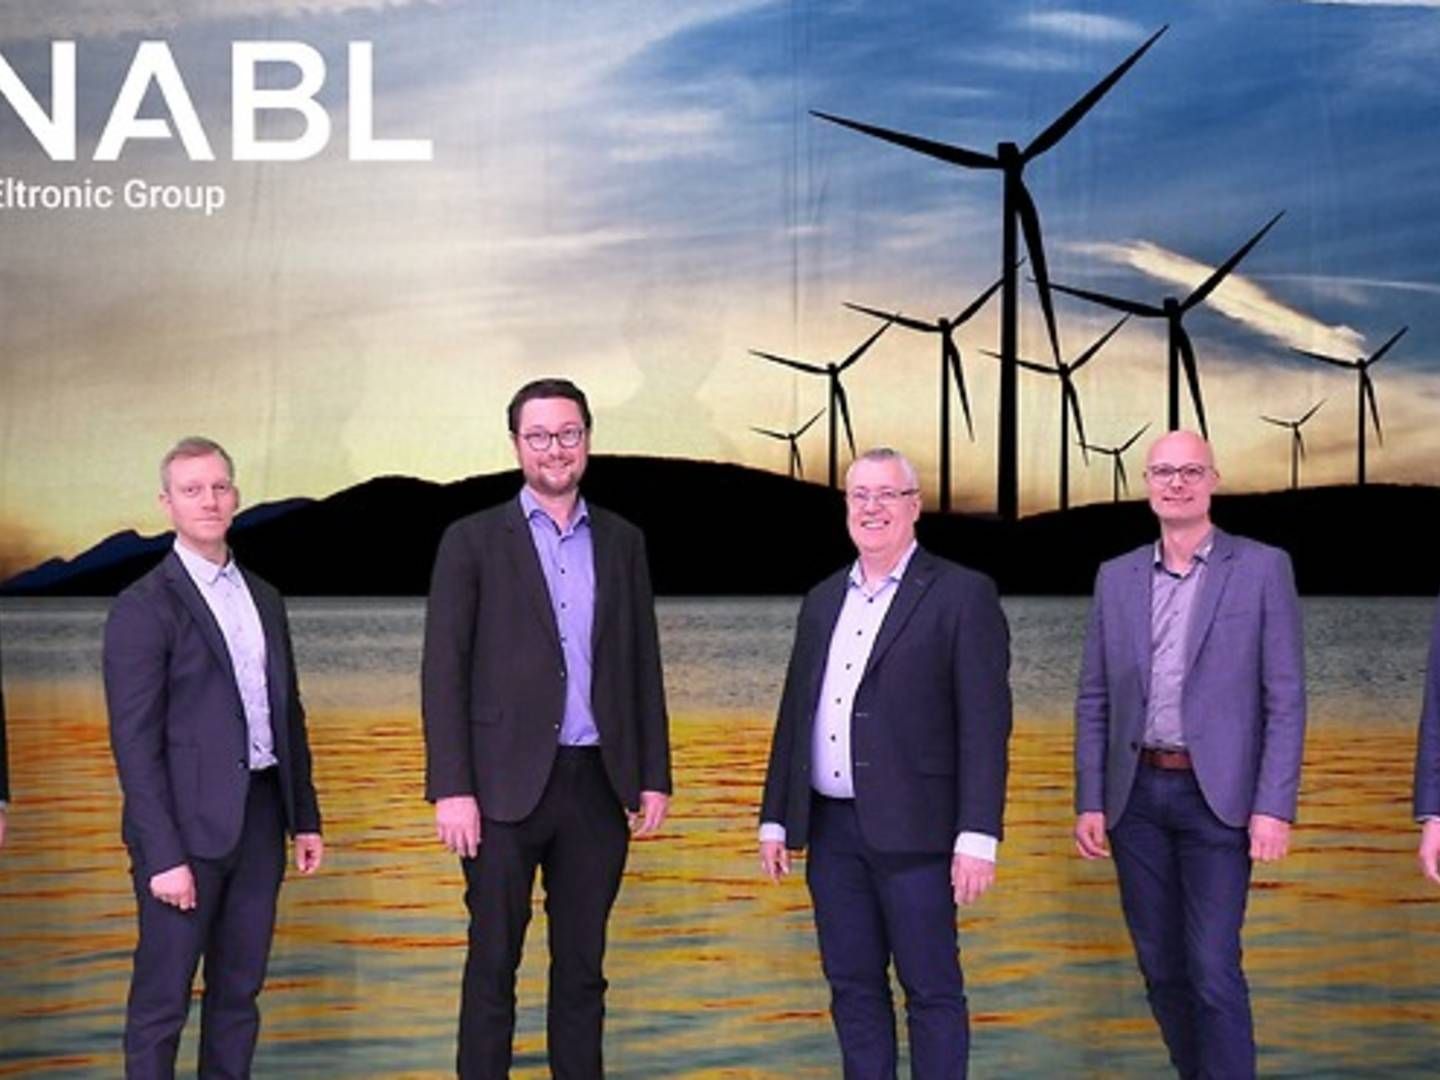 From right: Lars Jensen, owner and director of Eltronic Group, Rasmus Uhrskov Jessen, Henrik Mathiesen, Henrik Kjærgaard, Torben Blaaholm and Thomas Hedegaard, CEO. | Photo: Enabl